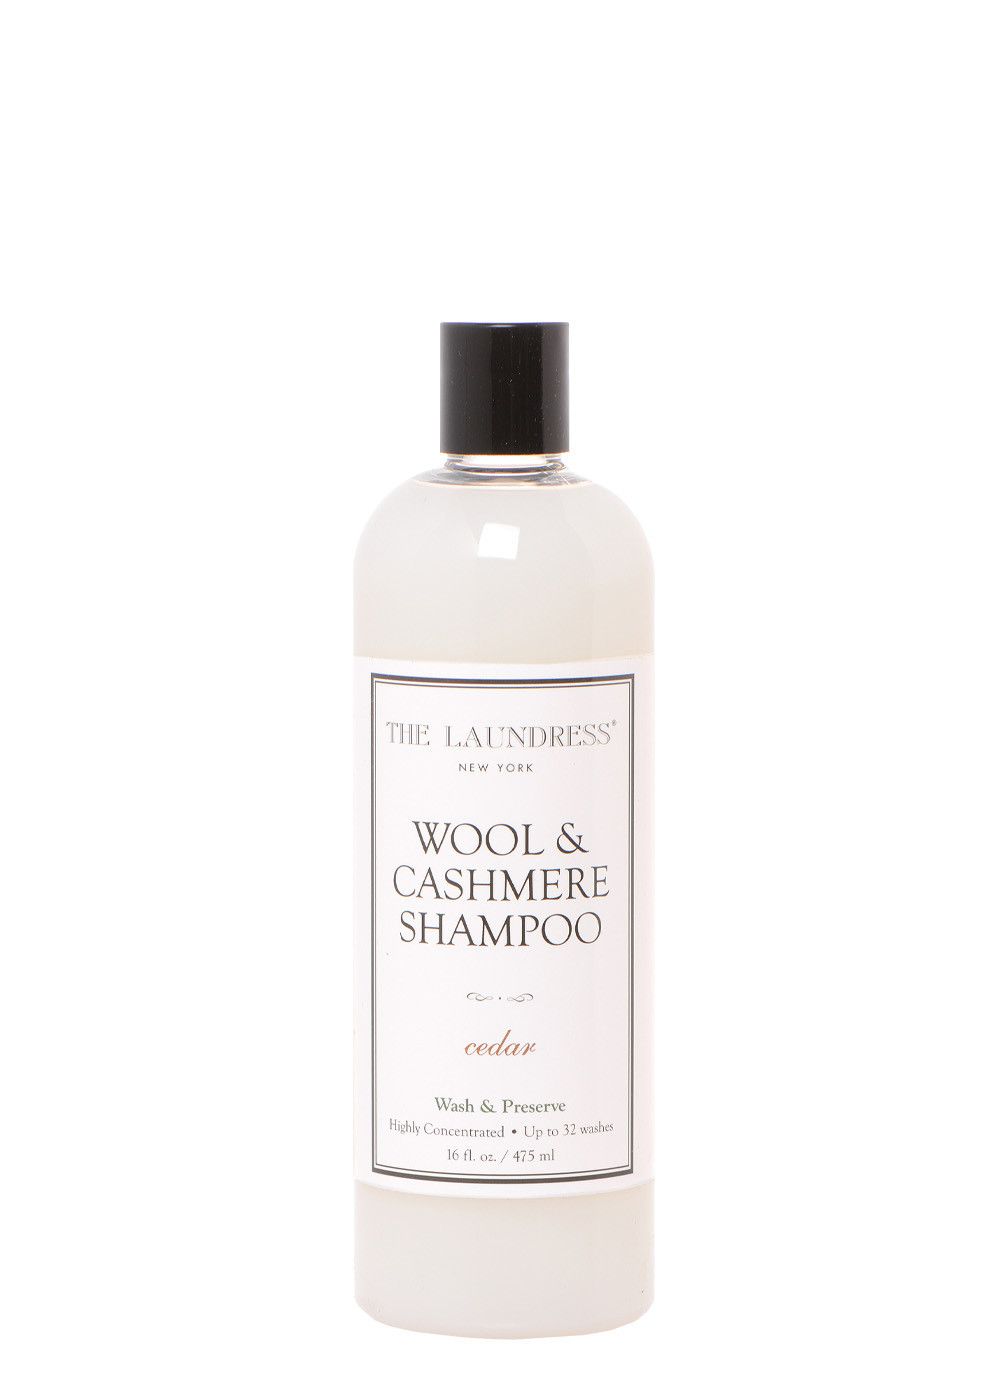 Wool & Cashmere Shampoo 16 fl oz